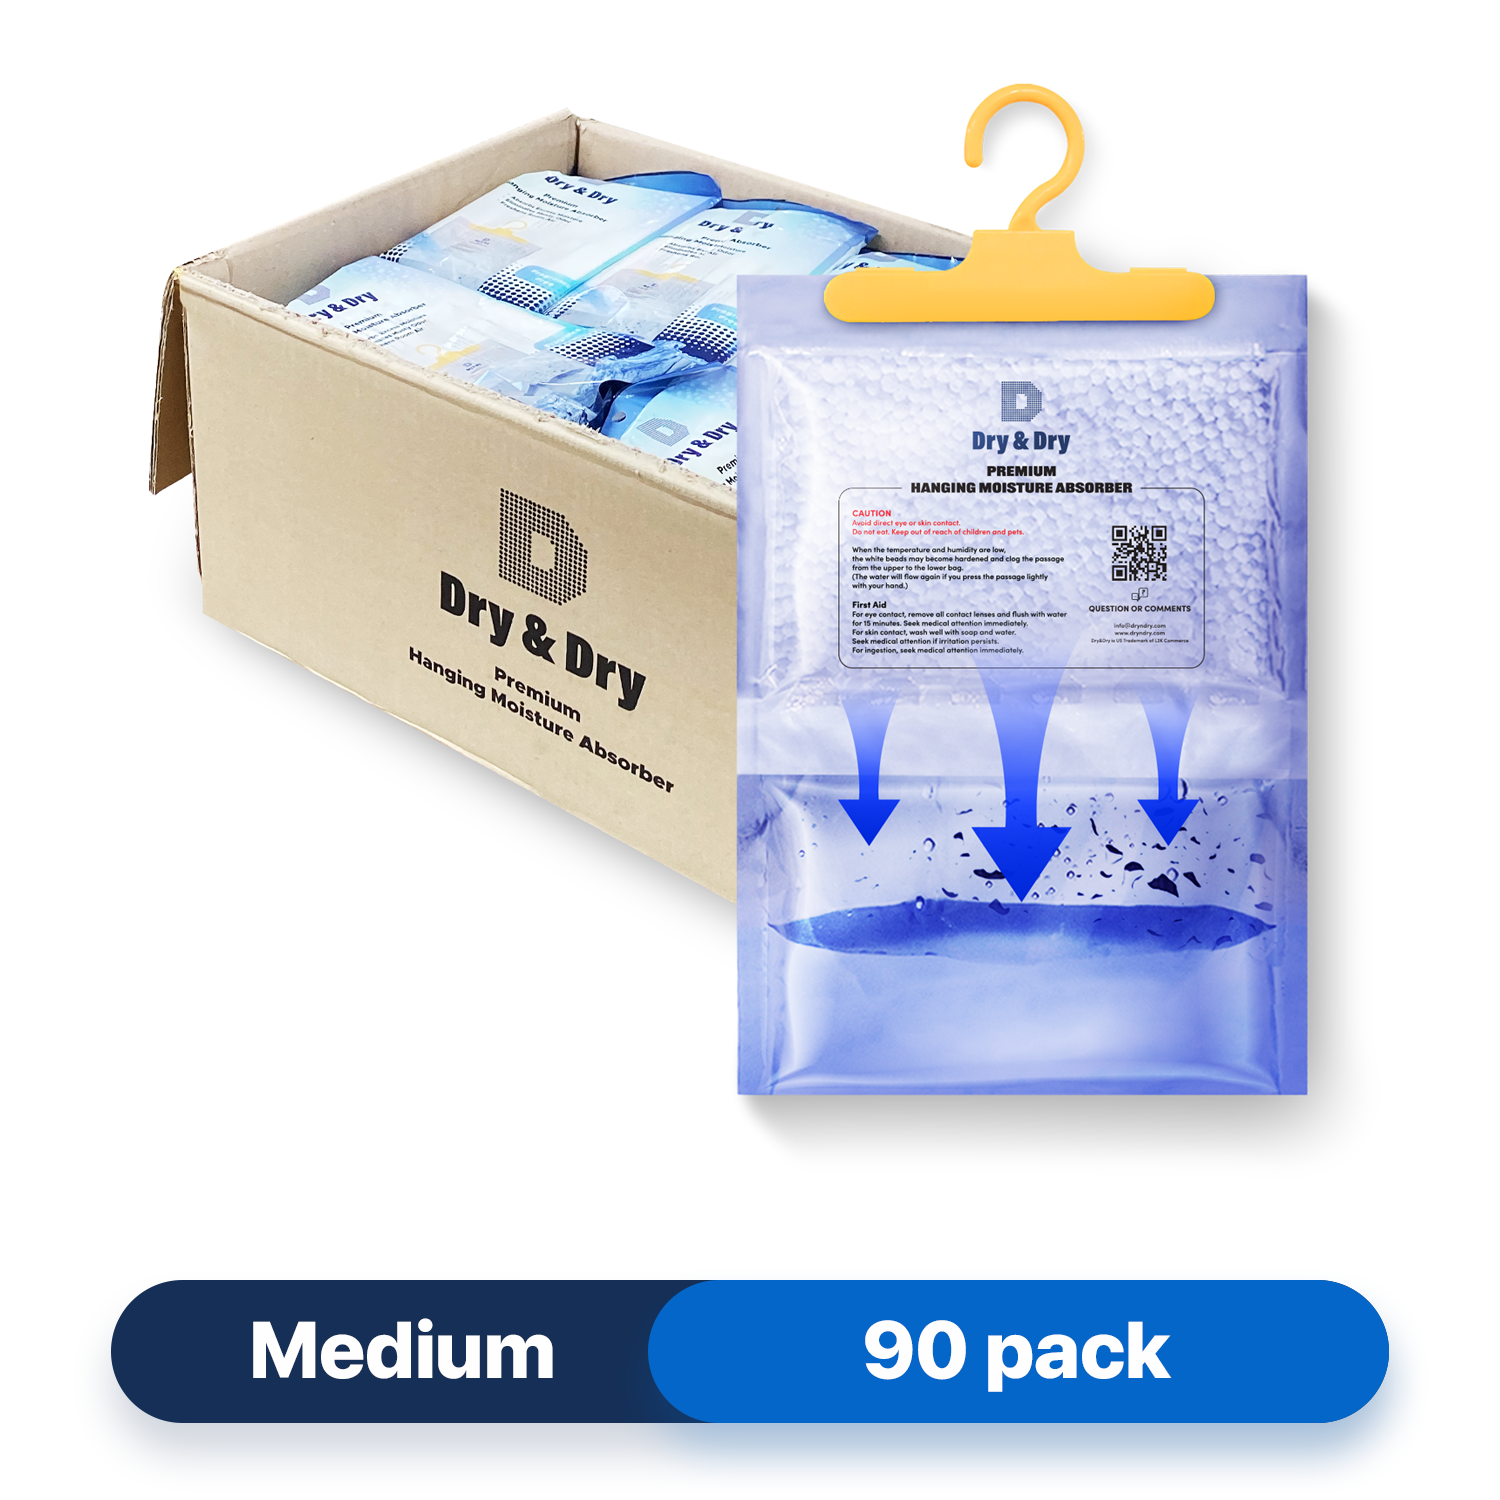 90 pack] [Net 7 oz/Pack] “Dry & Dry” Premium Hanging Moisture Absorbe